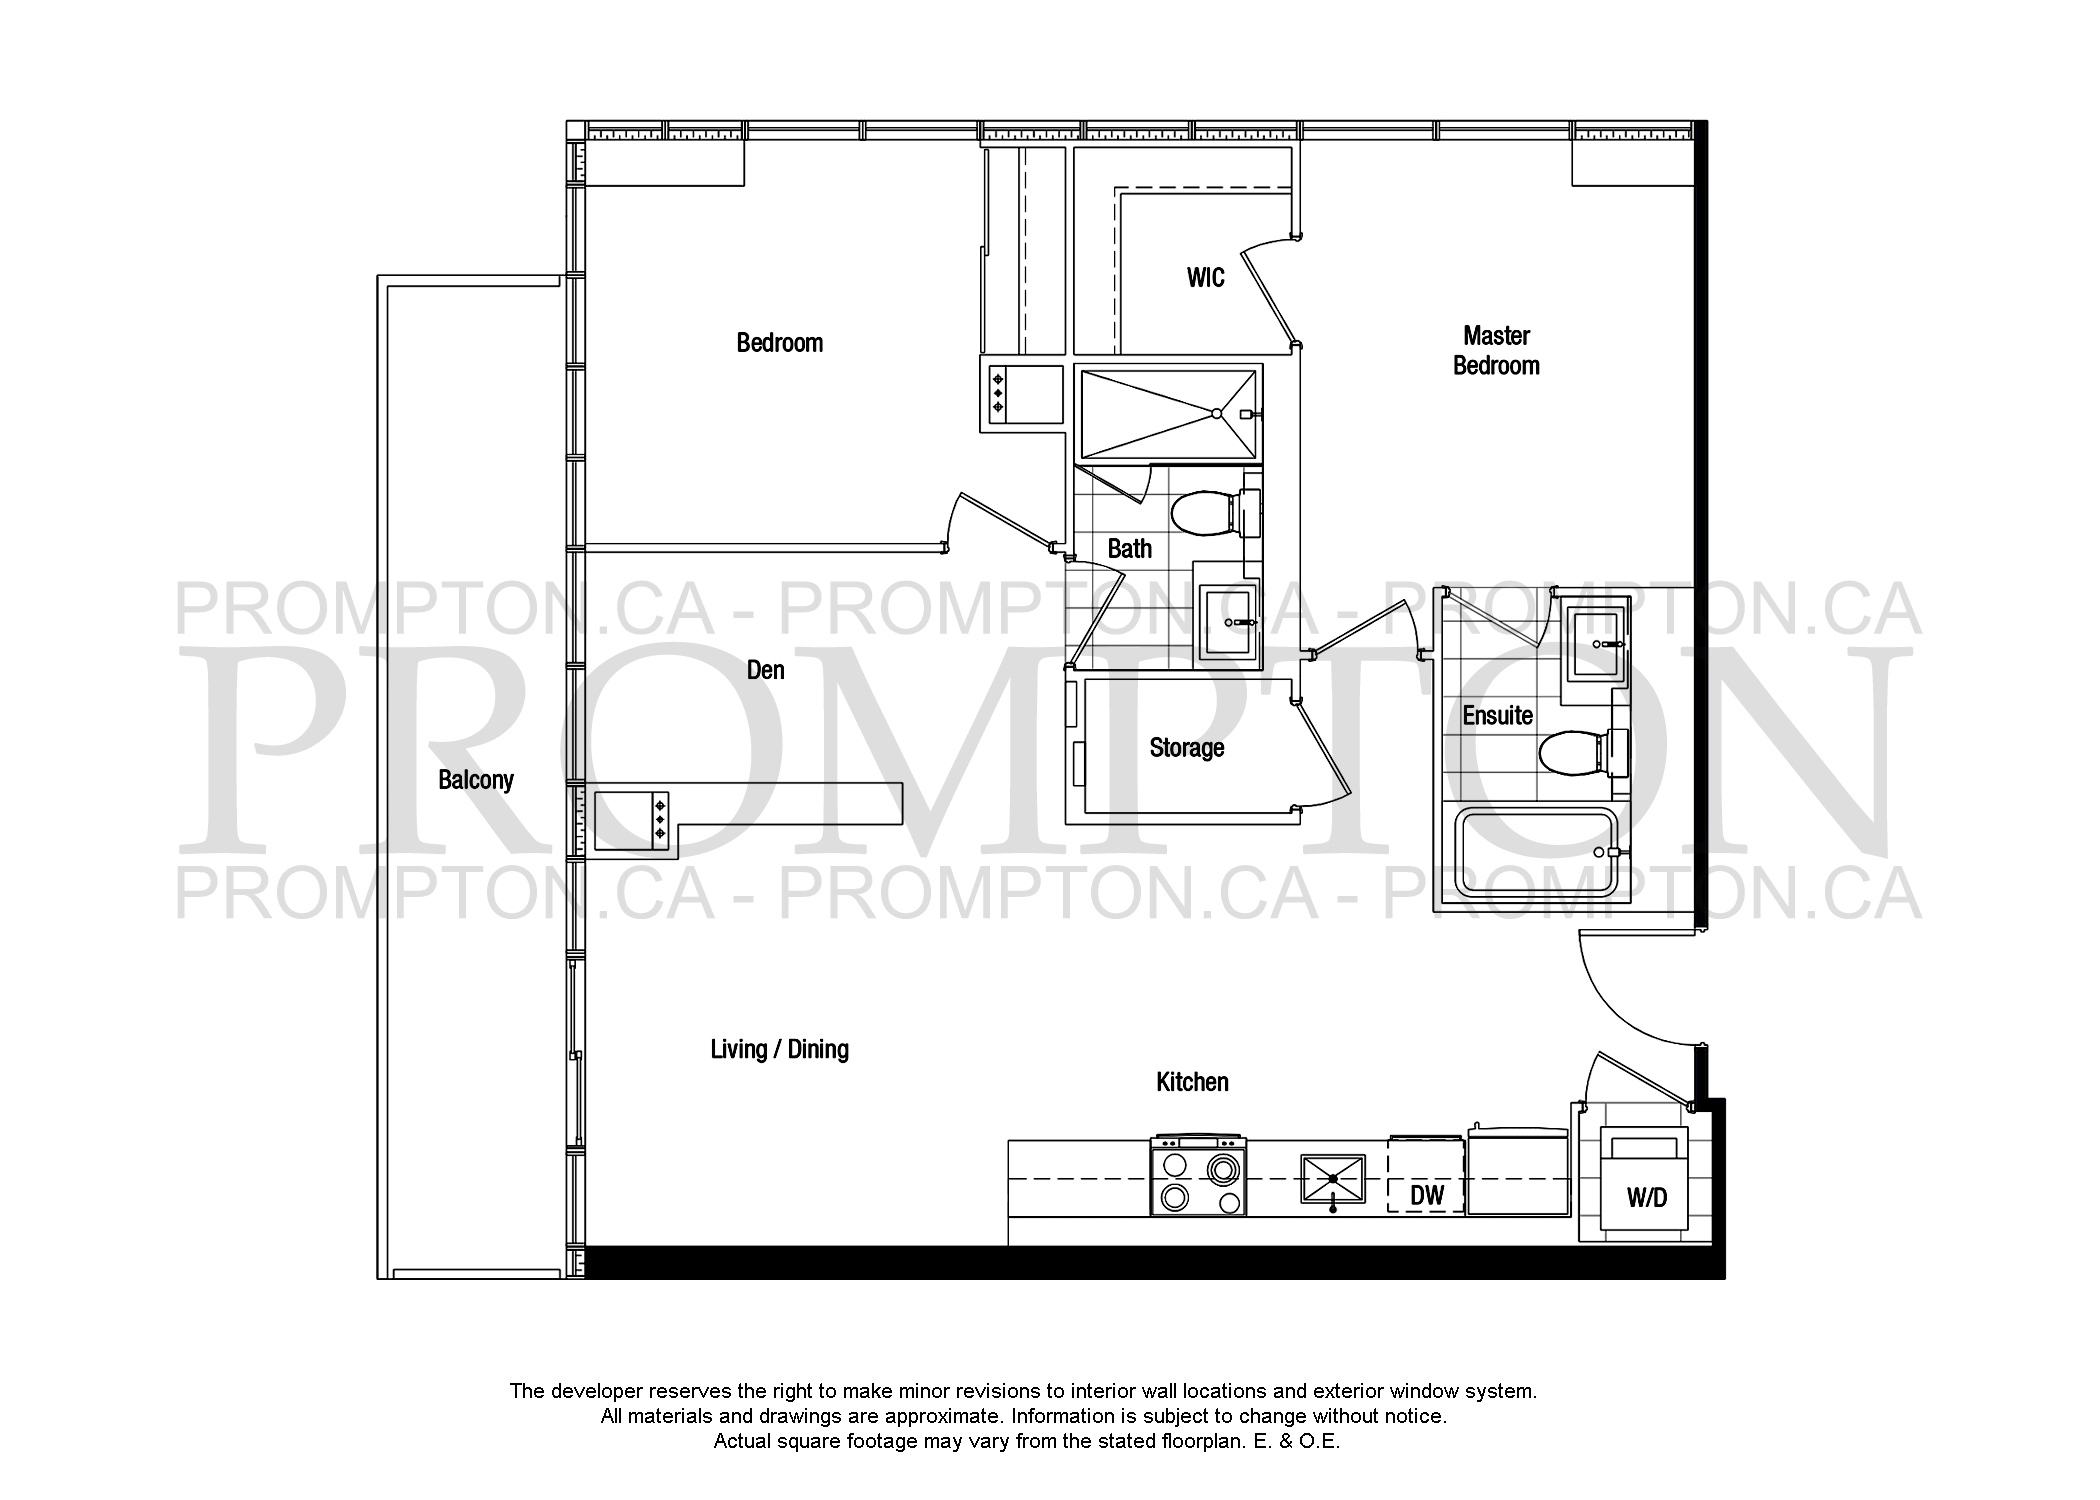 121 McMAHON DR Suite 3617 Prompton Real Estate